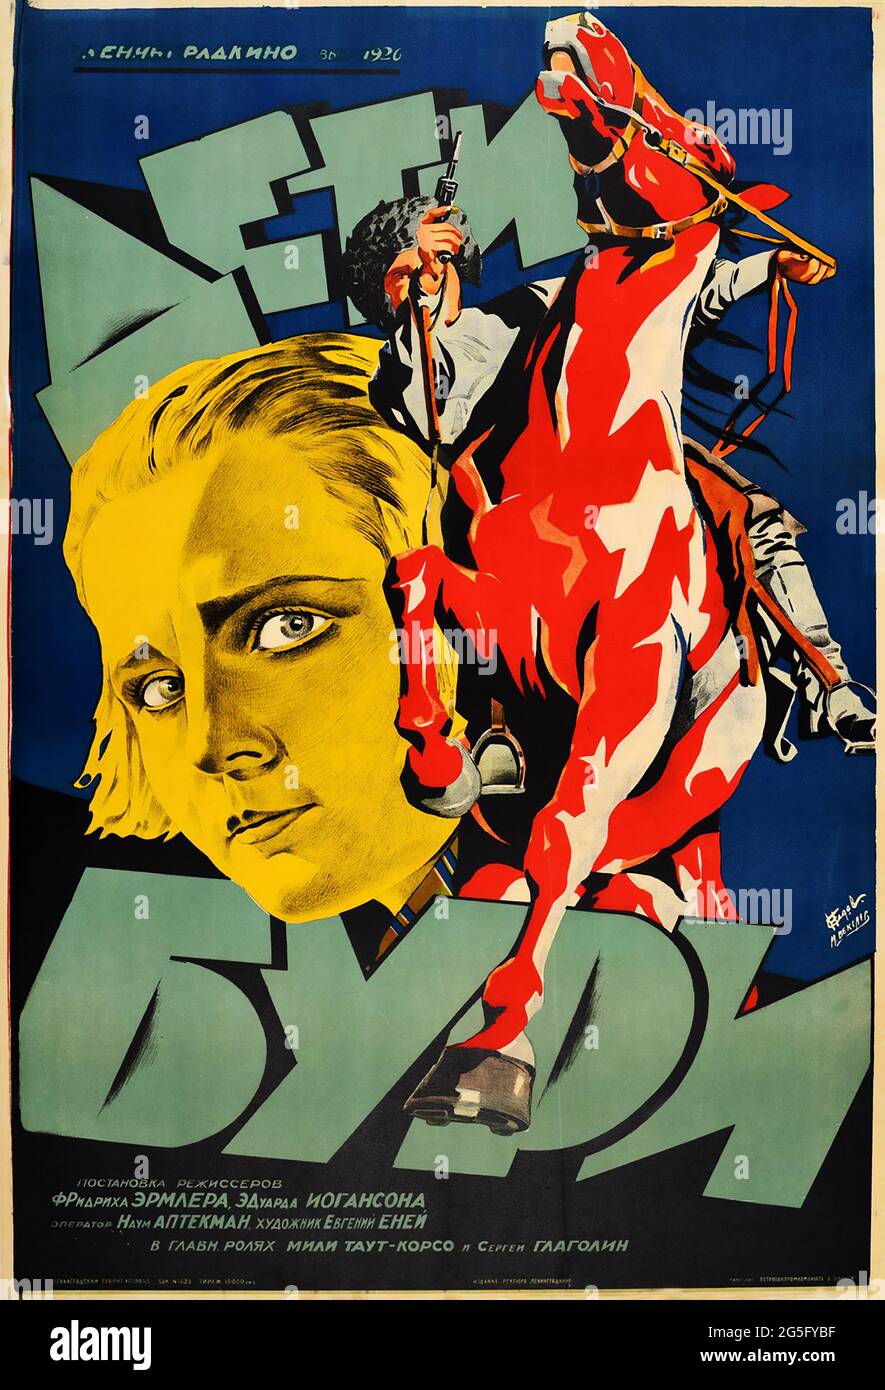 LASZLO MOHOLY-NAGY "Space Modulator L3" 1936 Bauhaus Constructivism Poster 